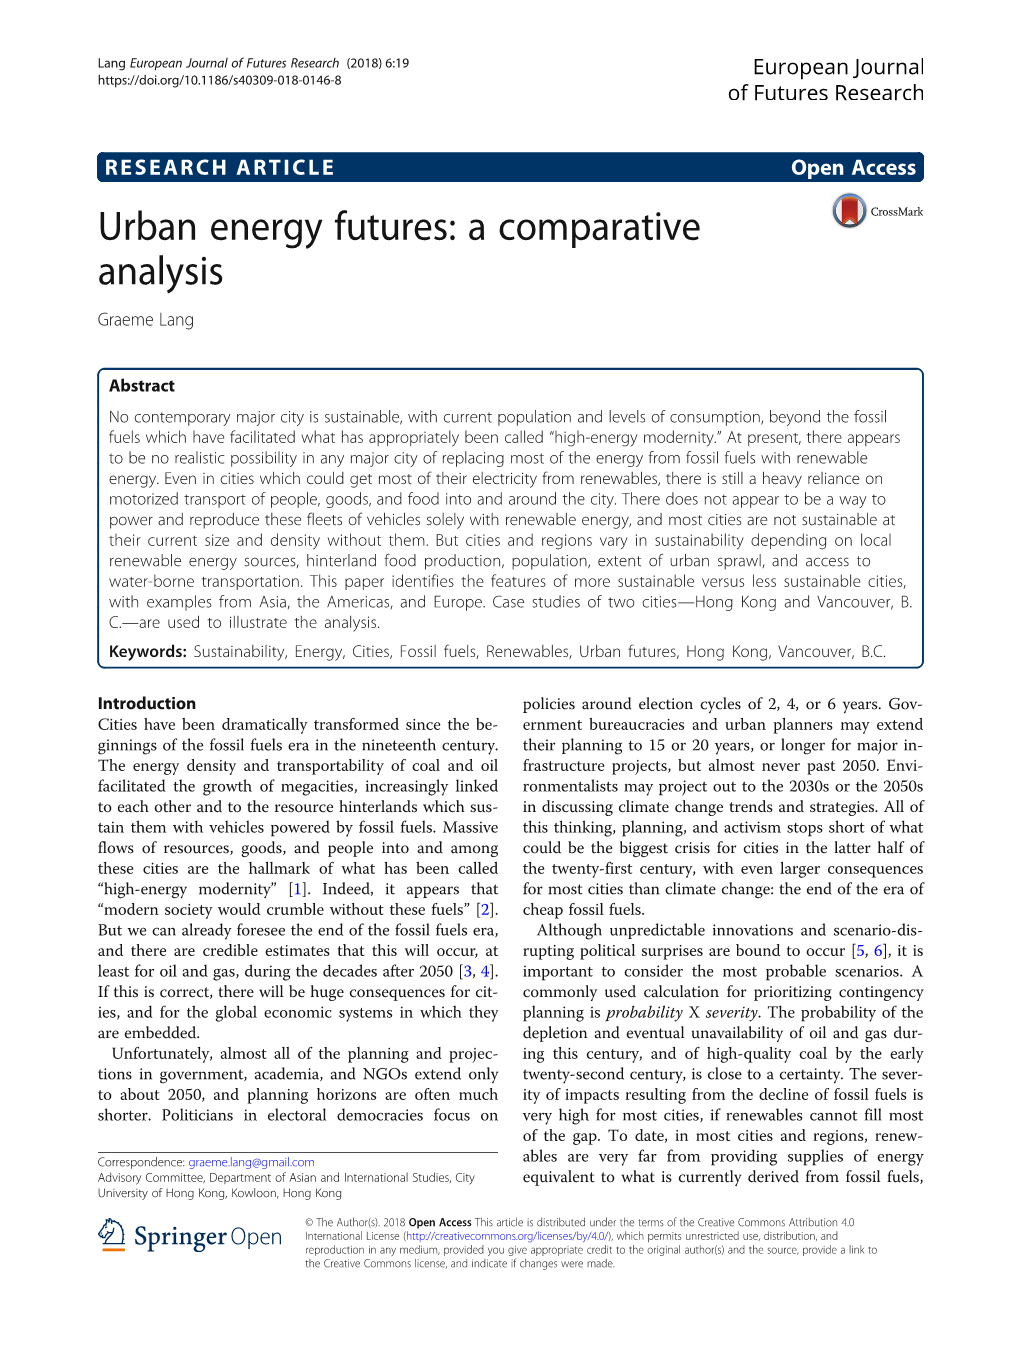 Urban Energy Futures: a Comparative Analysis Graeme Lang